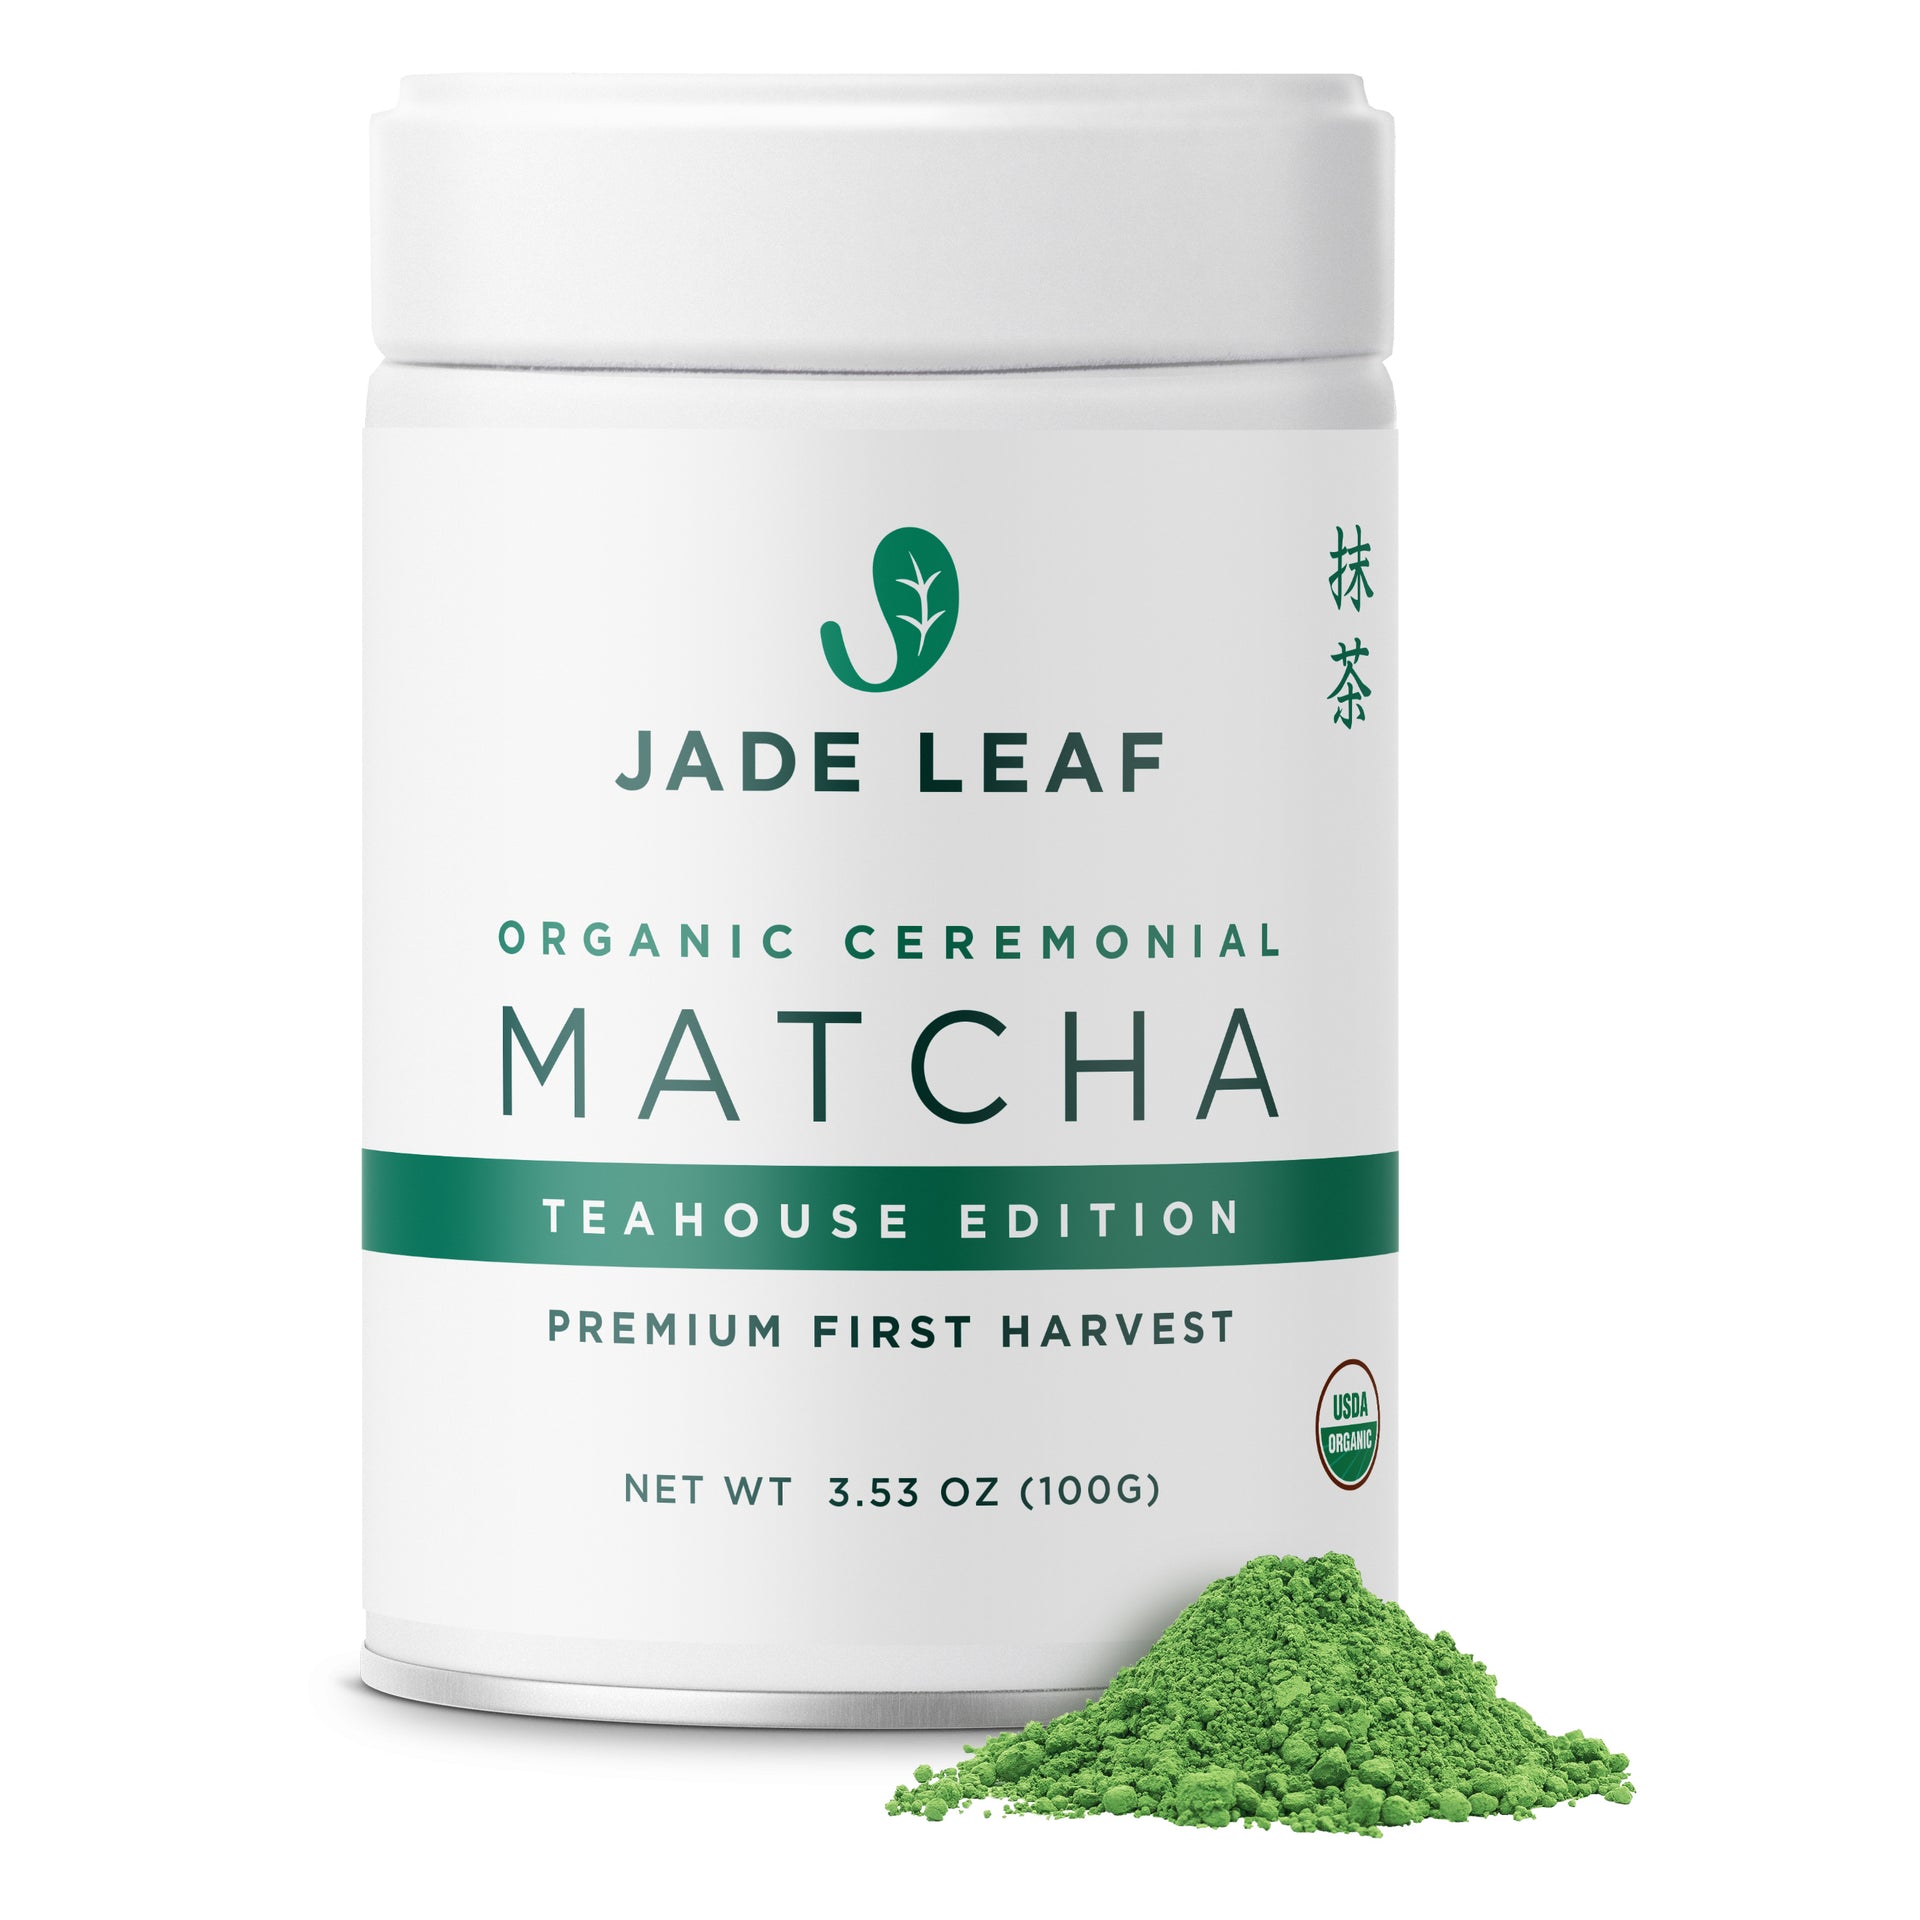 Jade Leaf Matcha Review - Matcha Connection